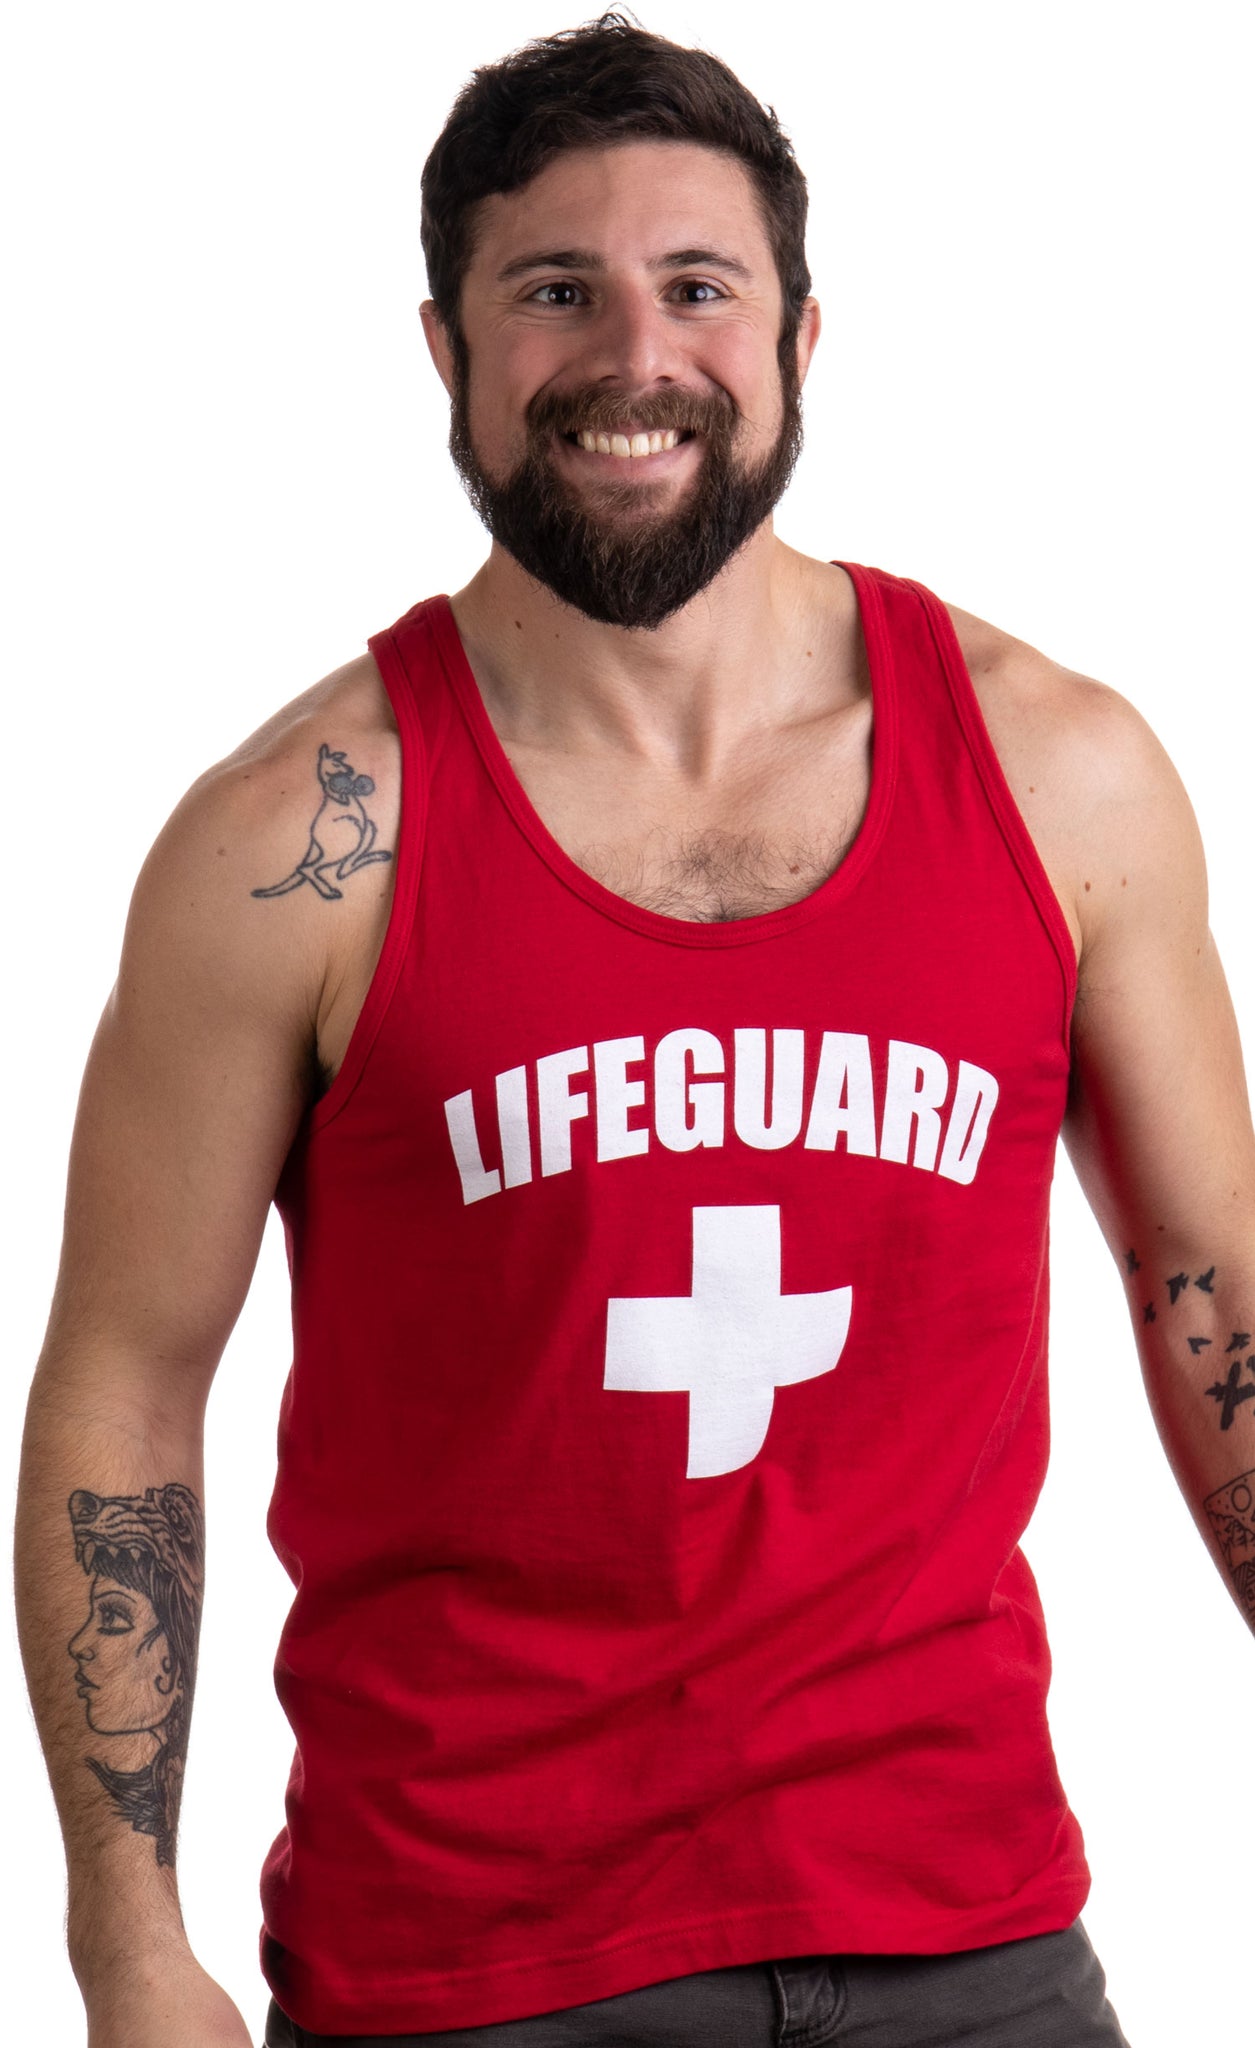 LIFEGUARD | Red Adult Lifeguarding Uniform Costume Unisex Tank Top Men ...